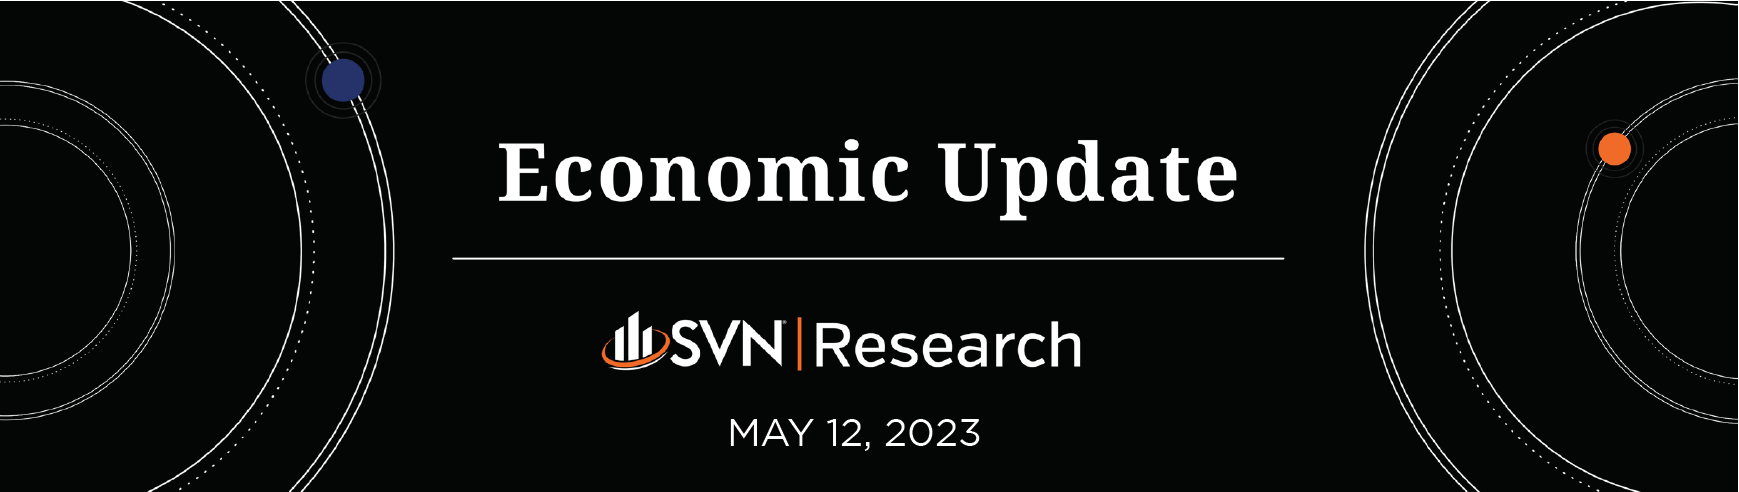 SVN | Research Economic Update 05.12.2023